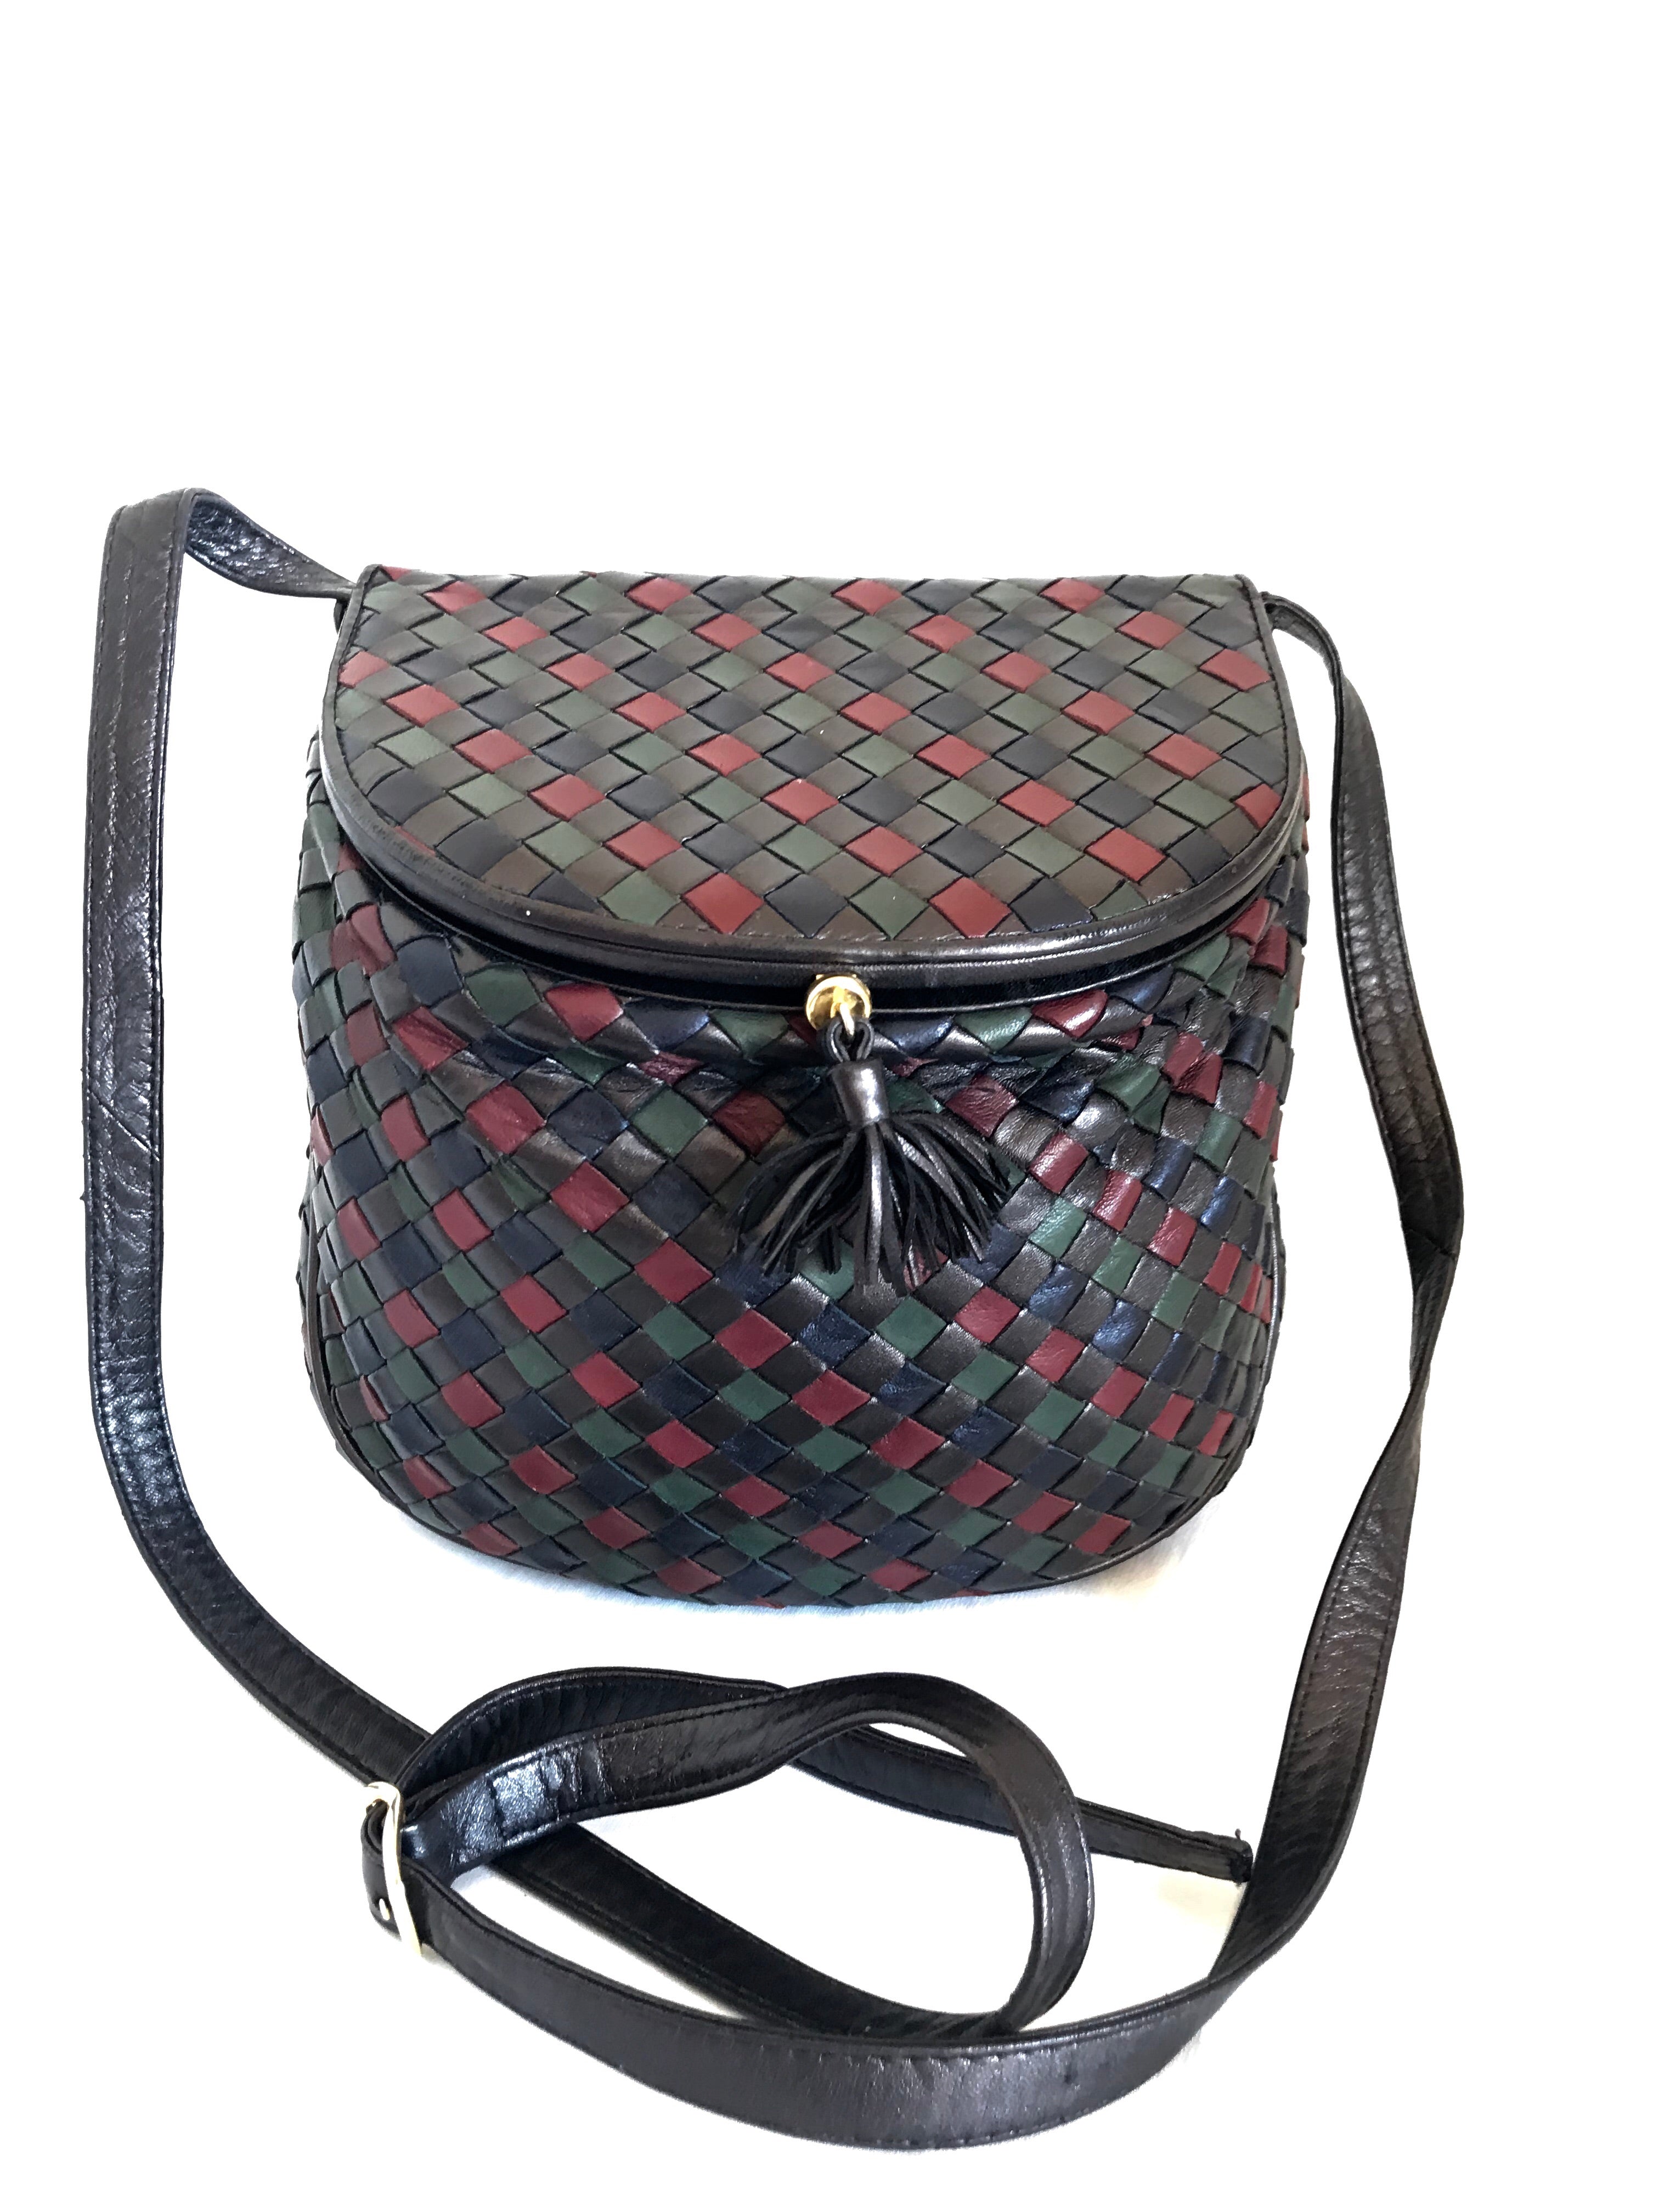 Authentic Rare Louis Vuitton Speedy Tote Multicolor Fringe Bag